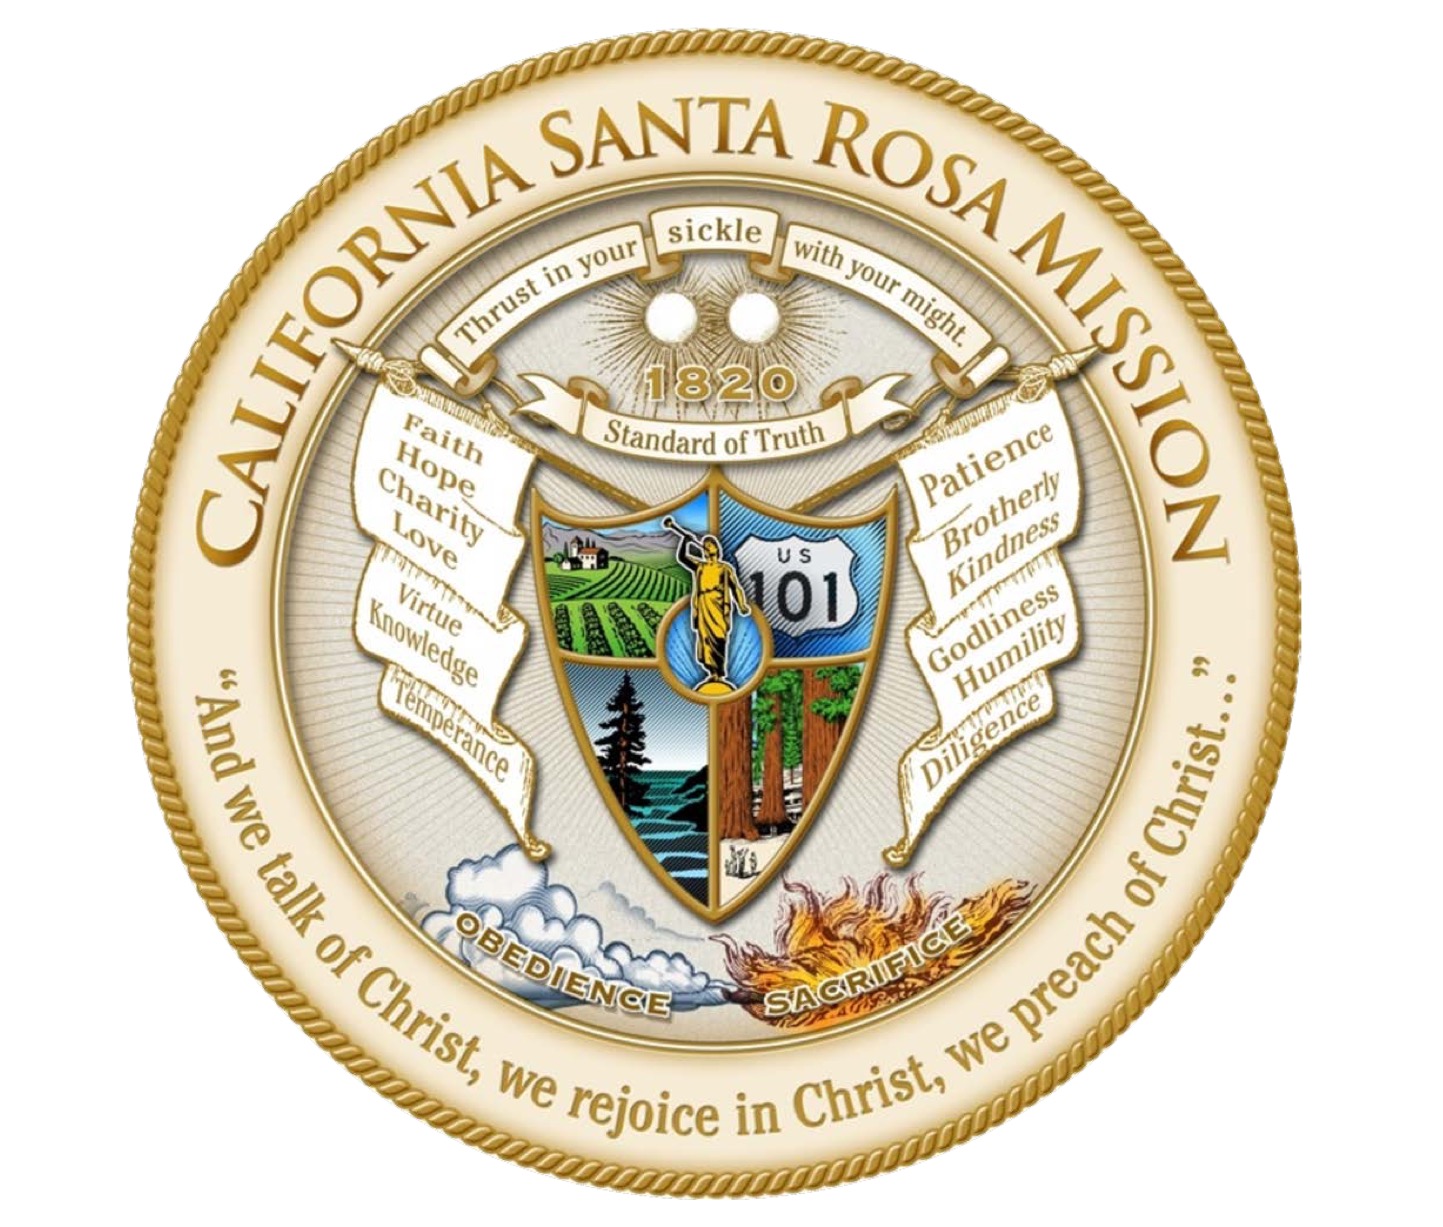 Santa Rosa MIssion